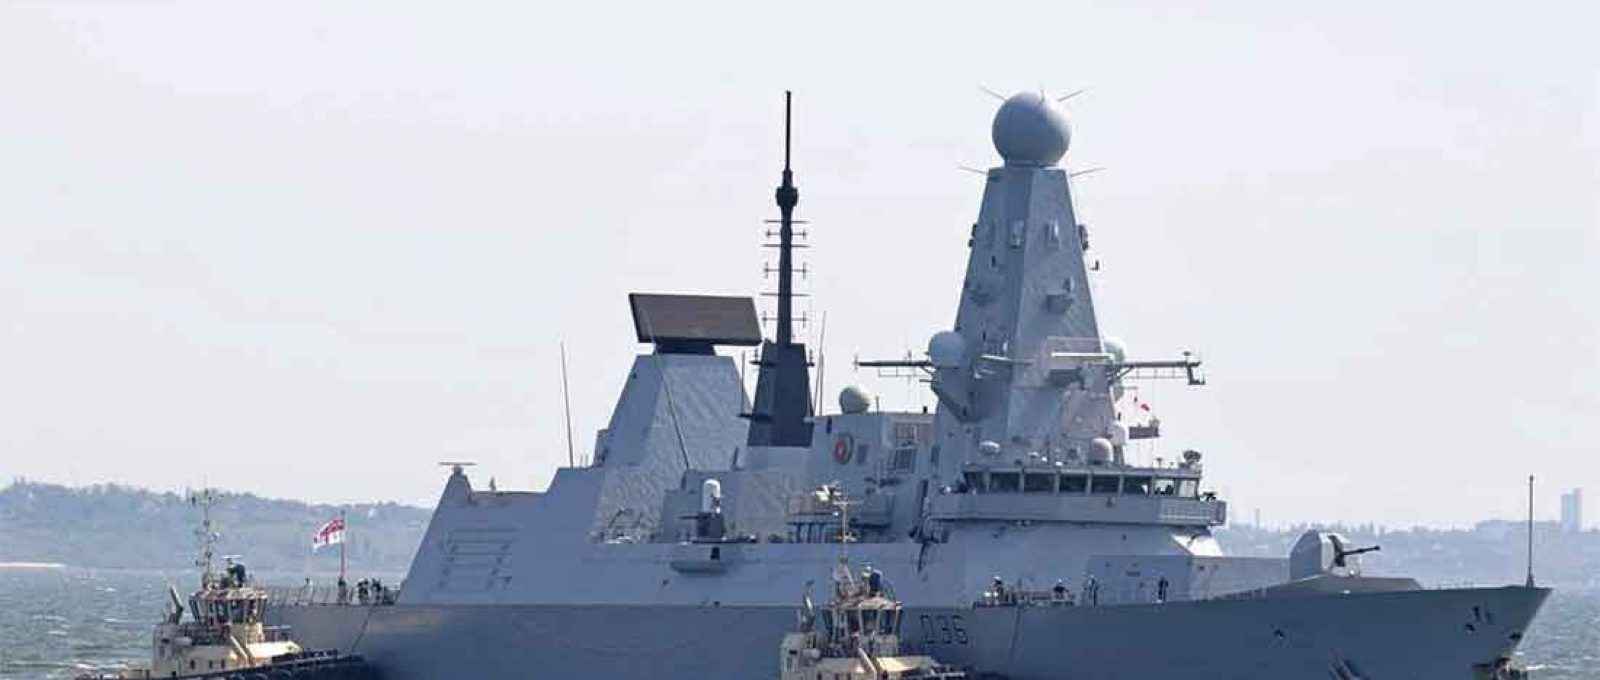 Destroier britânico HMS Defender (Foto: BatManS/Shutterstock).